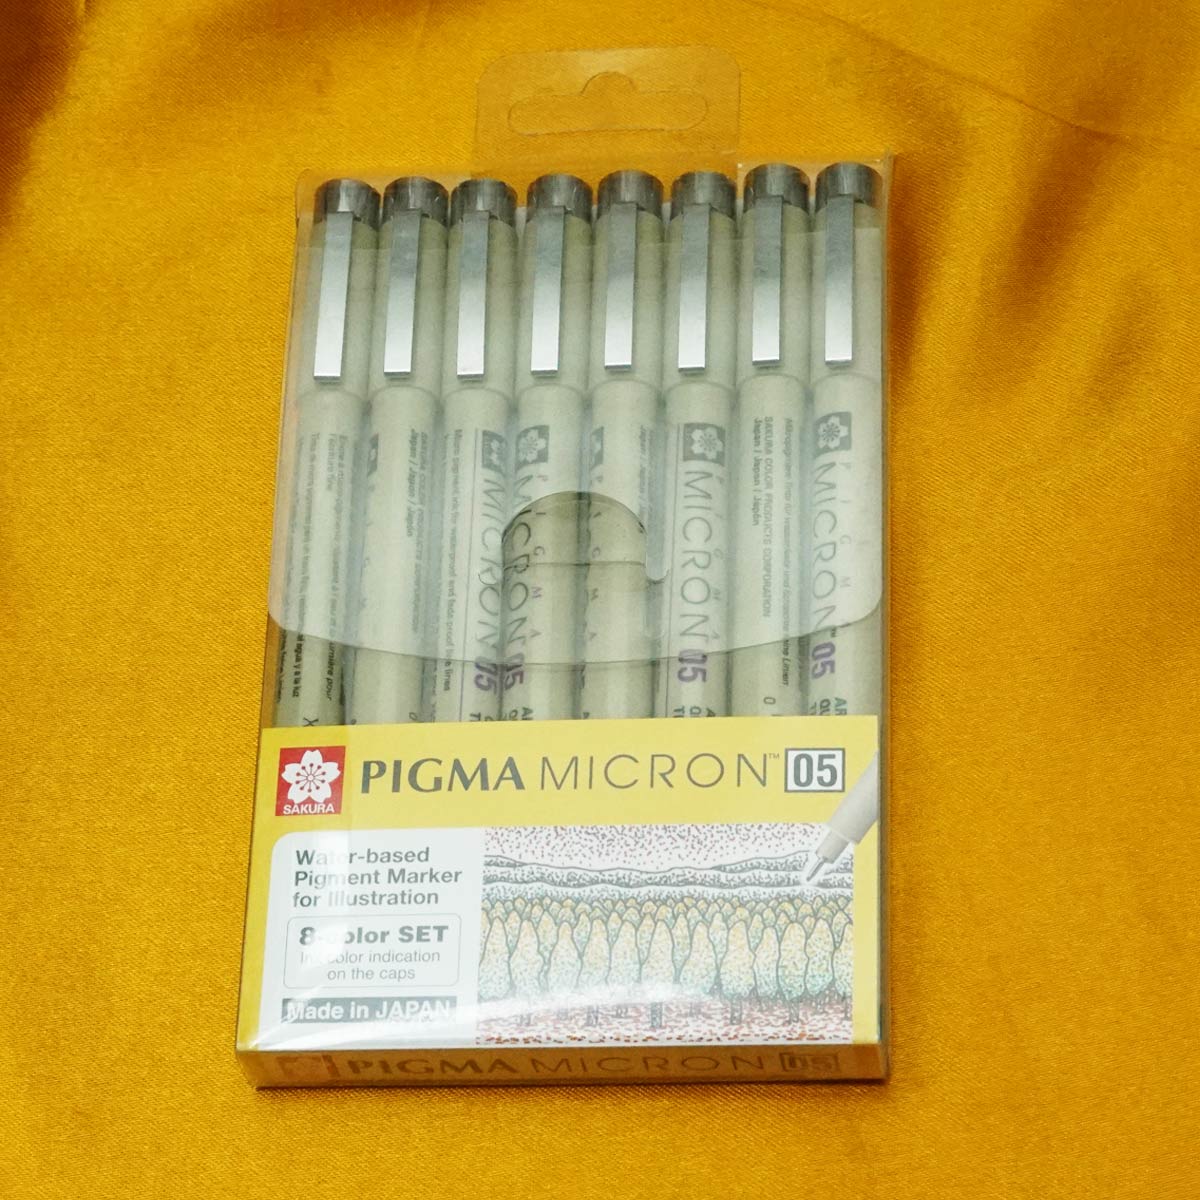 Sakura Pigma Micron 05 Water Based Pigment Marker With 8 Multi Color Set Pen SKU 21614